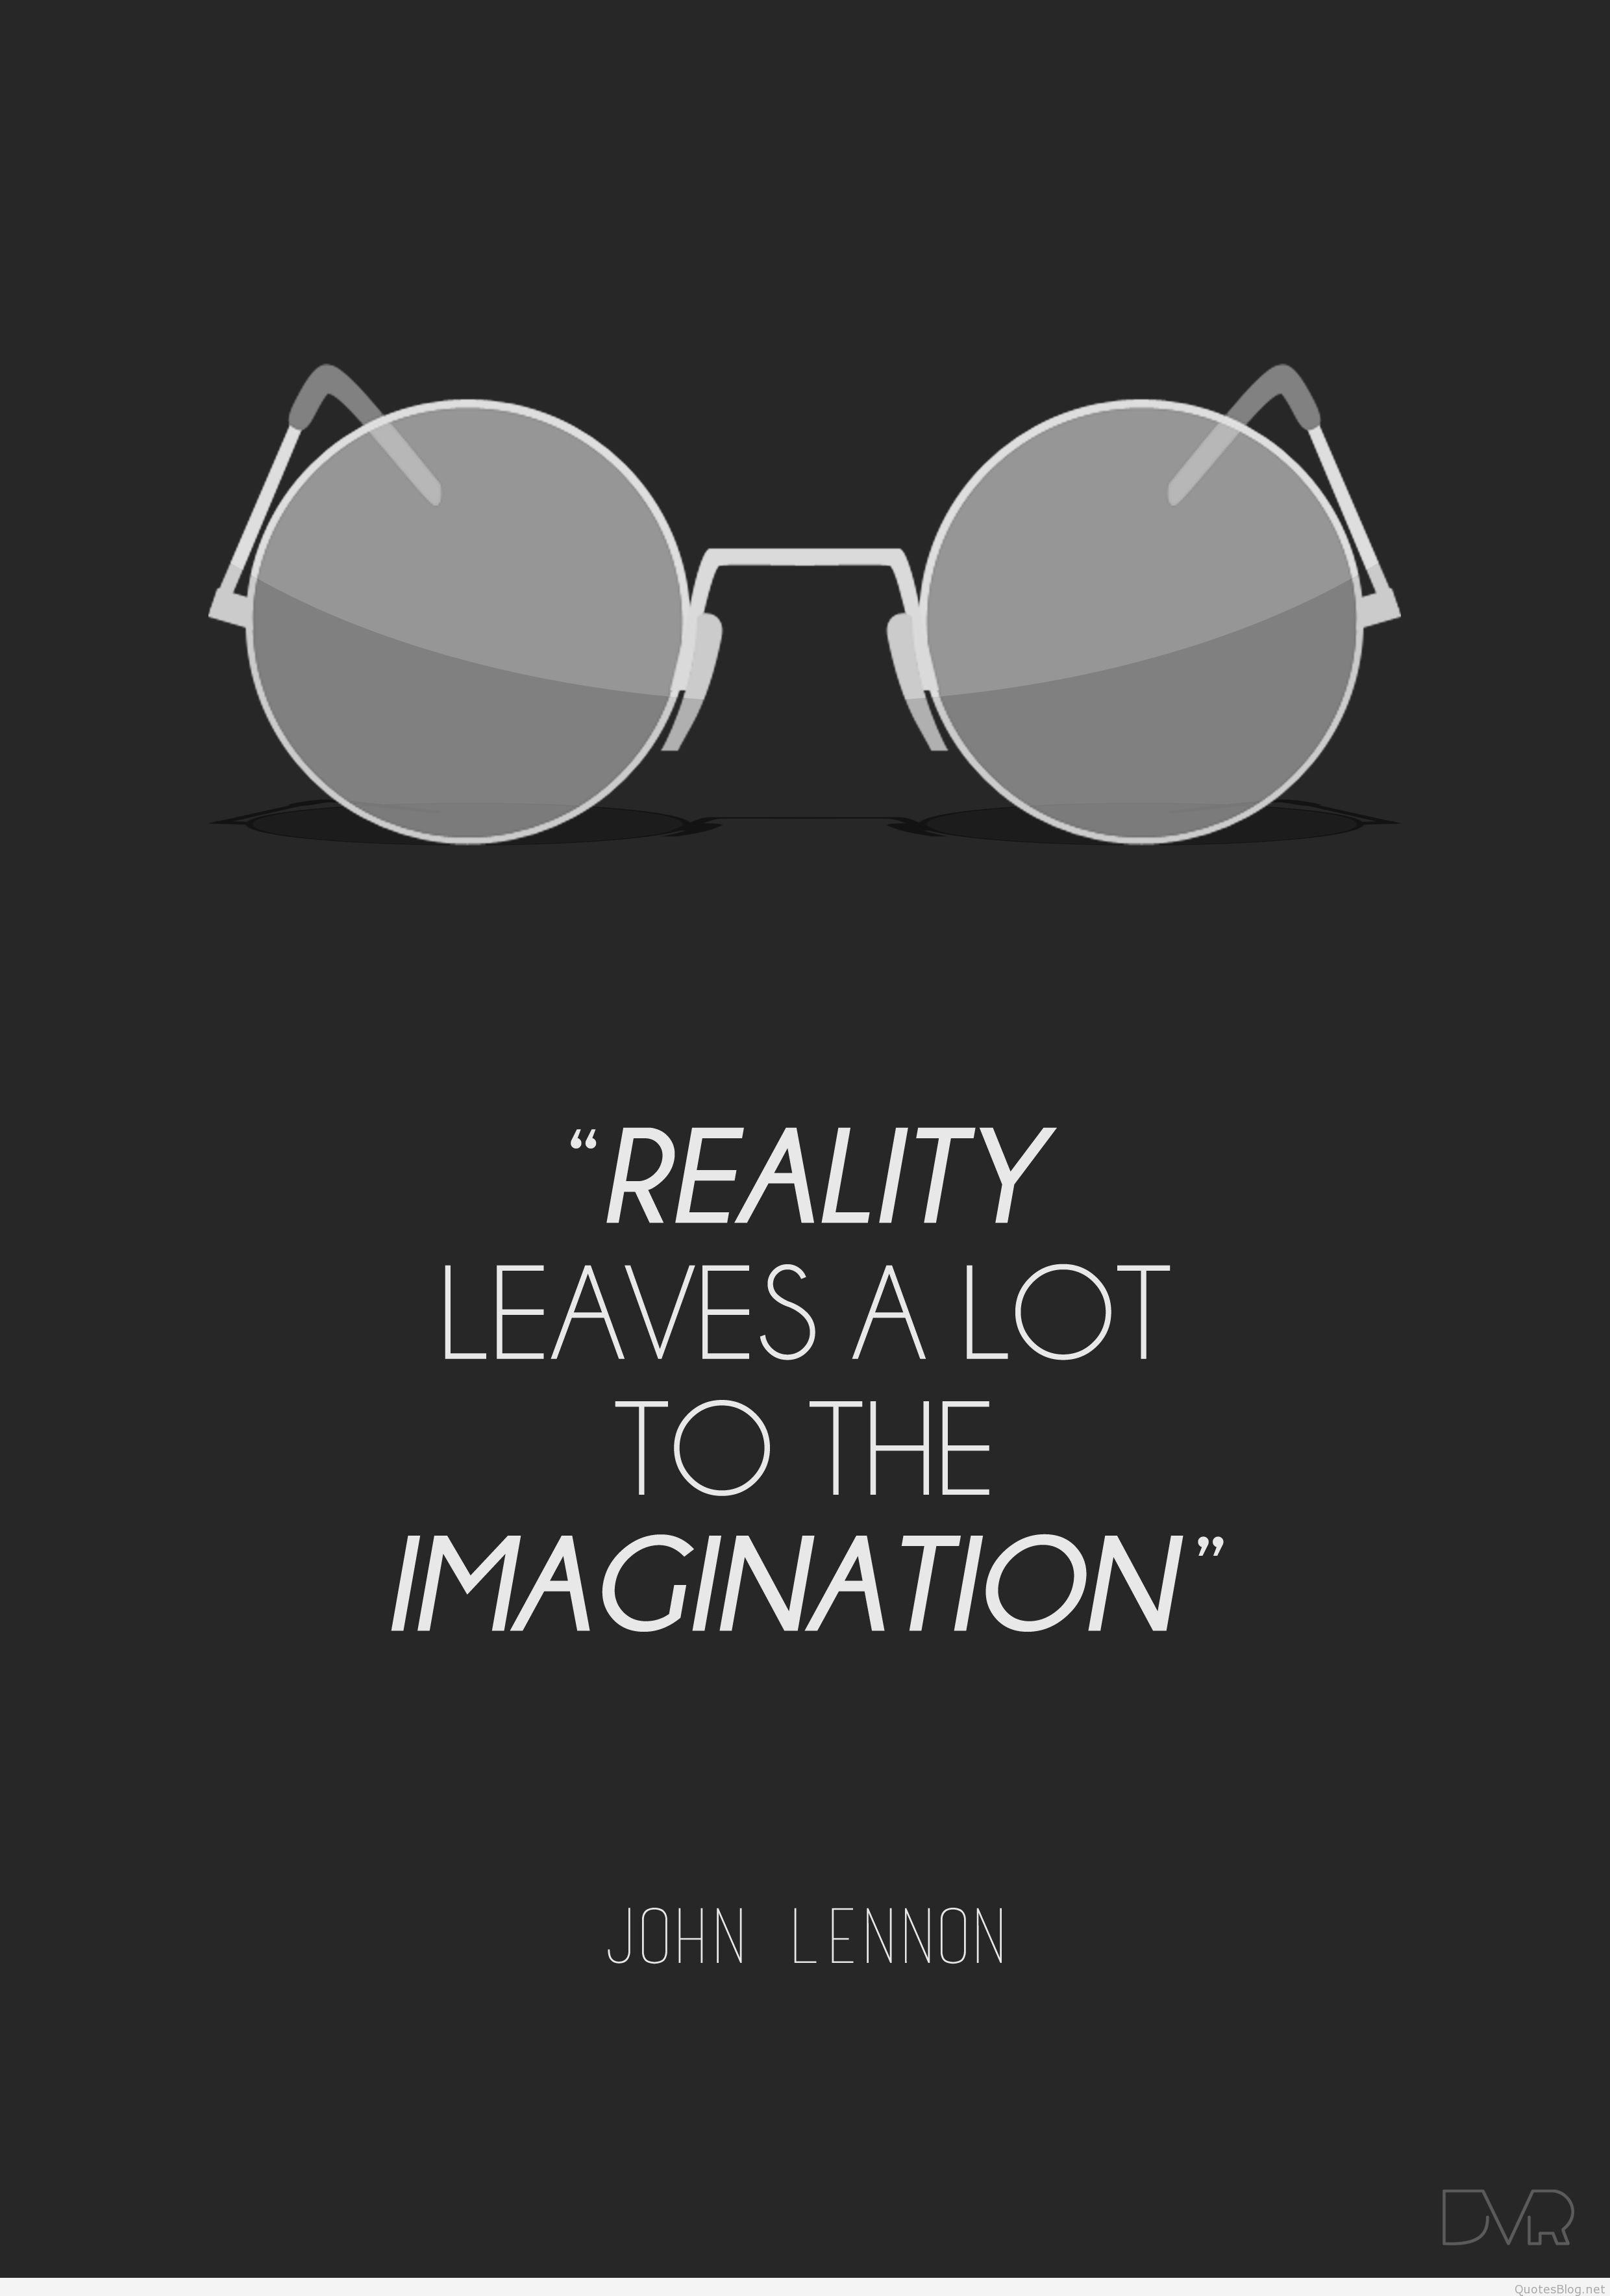 600292 Imagine  John Lennon quote  Rare Gallery HD Wallpapers